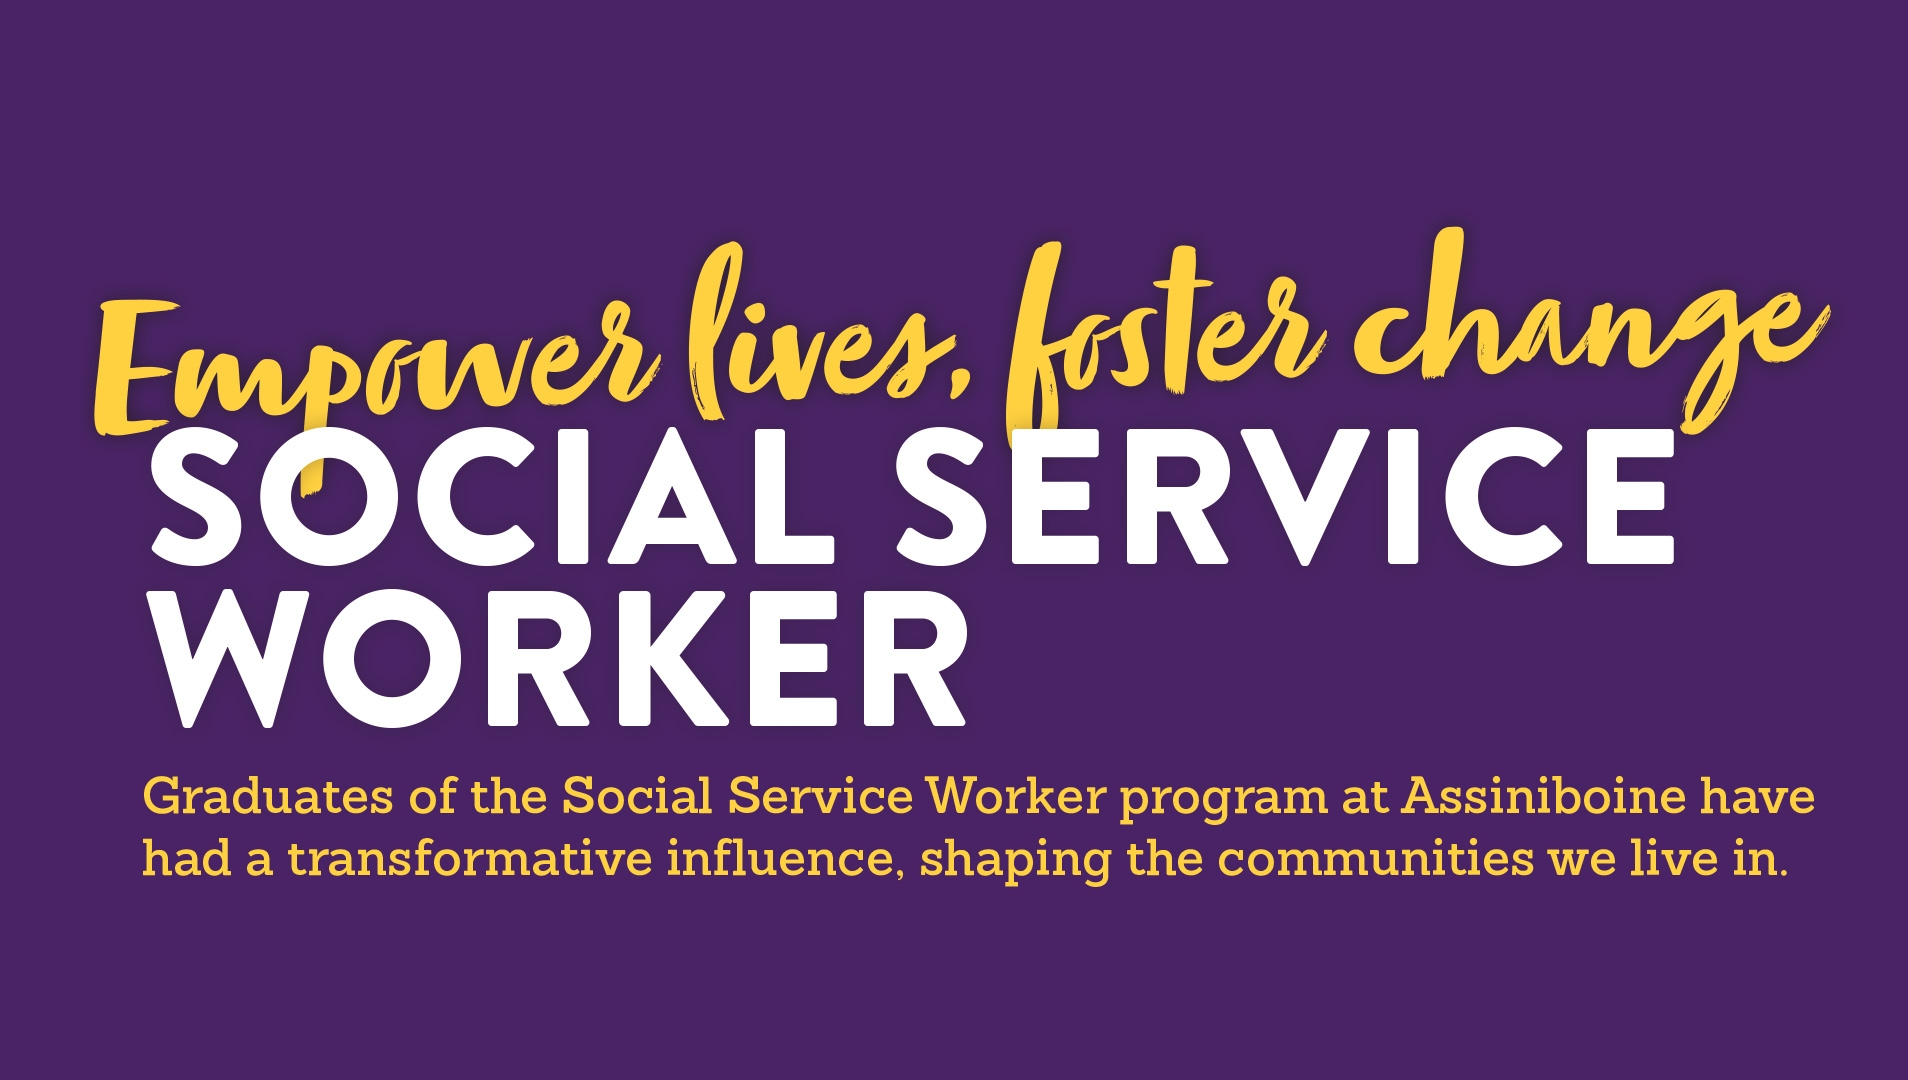 Social Service Worker - Empower lives, foster change.